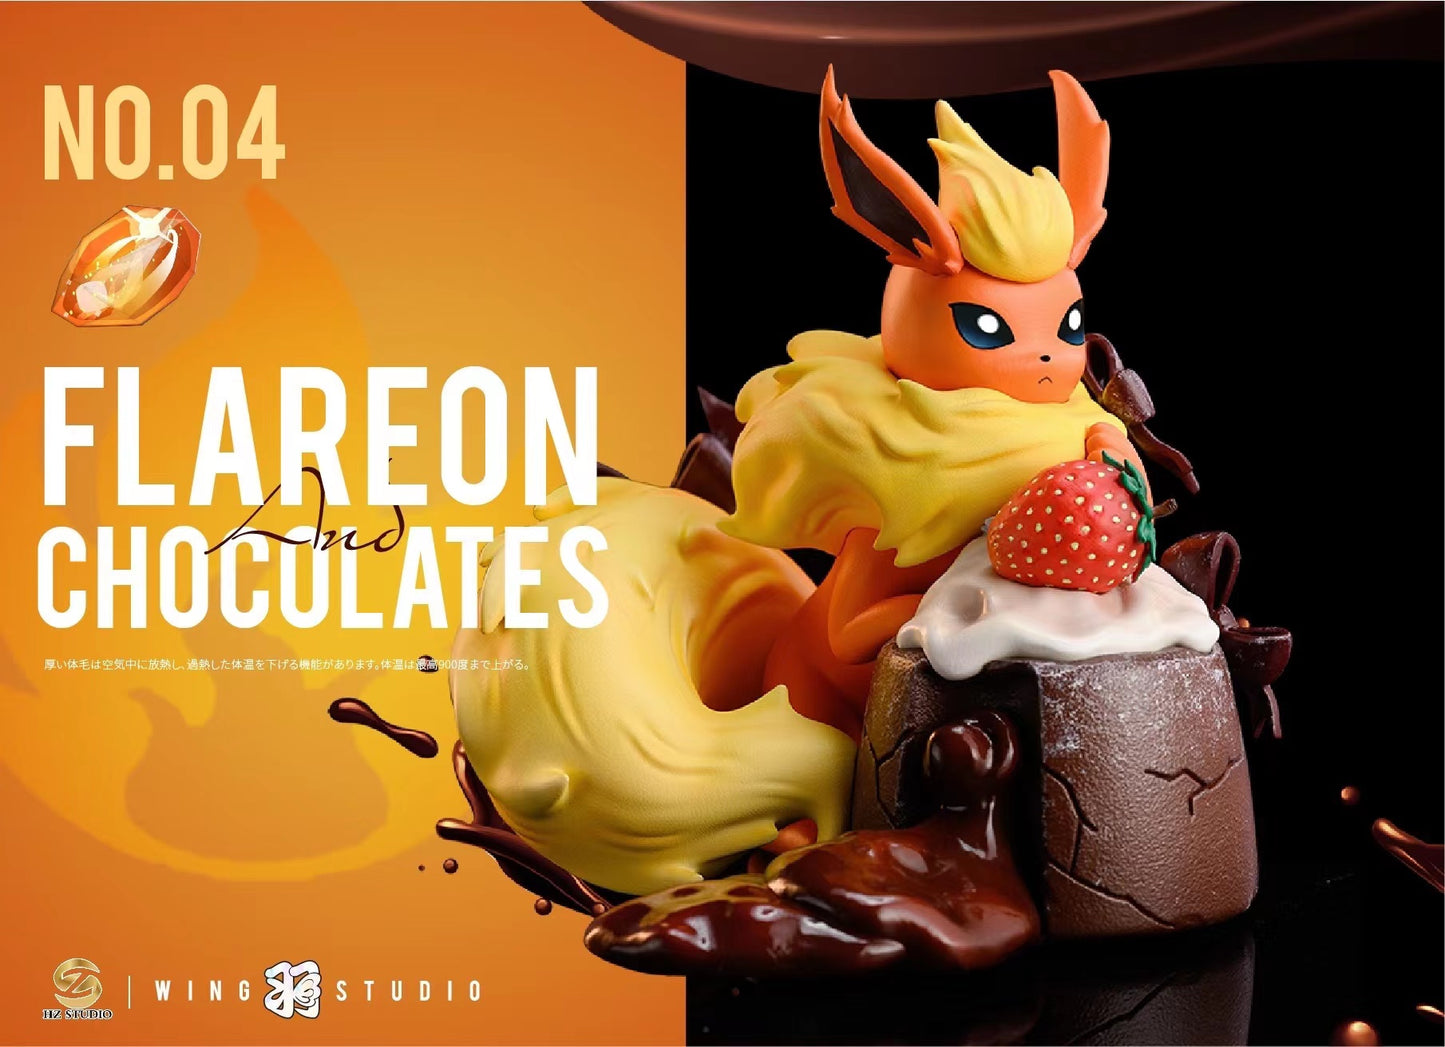 HZ Studio - Desserts Series Chocolates Flareon [IN-STOCK]